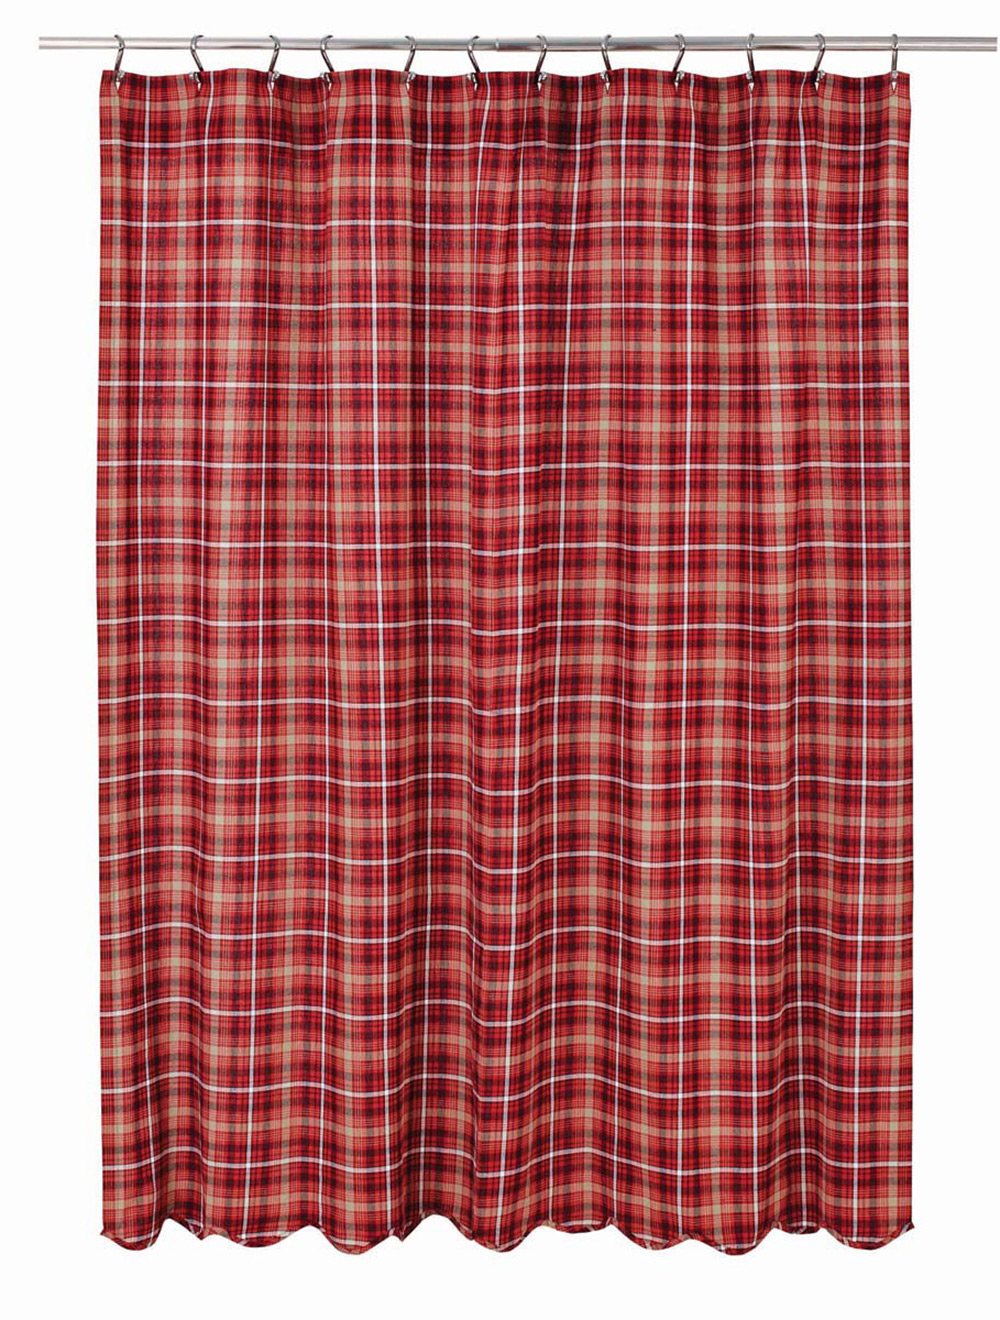 Braxton Red Plaid Fabric Shower Curtain, Country Red Plaid Shower Curtain